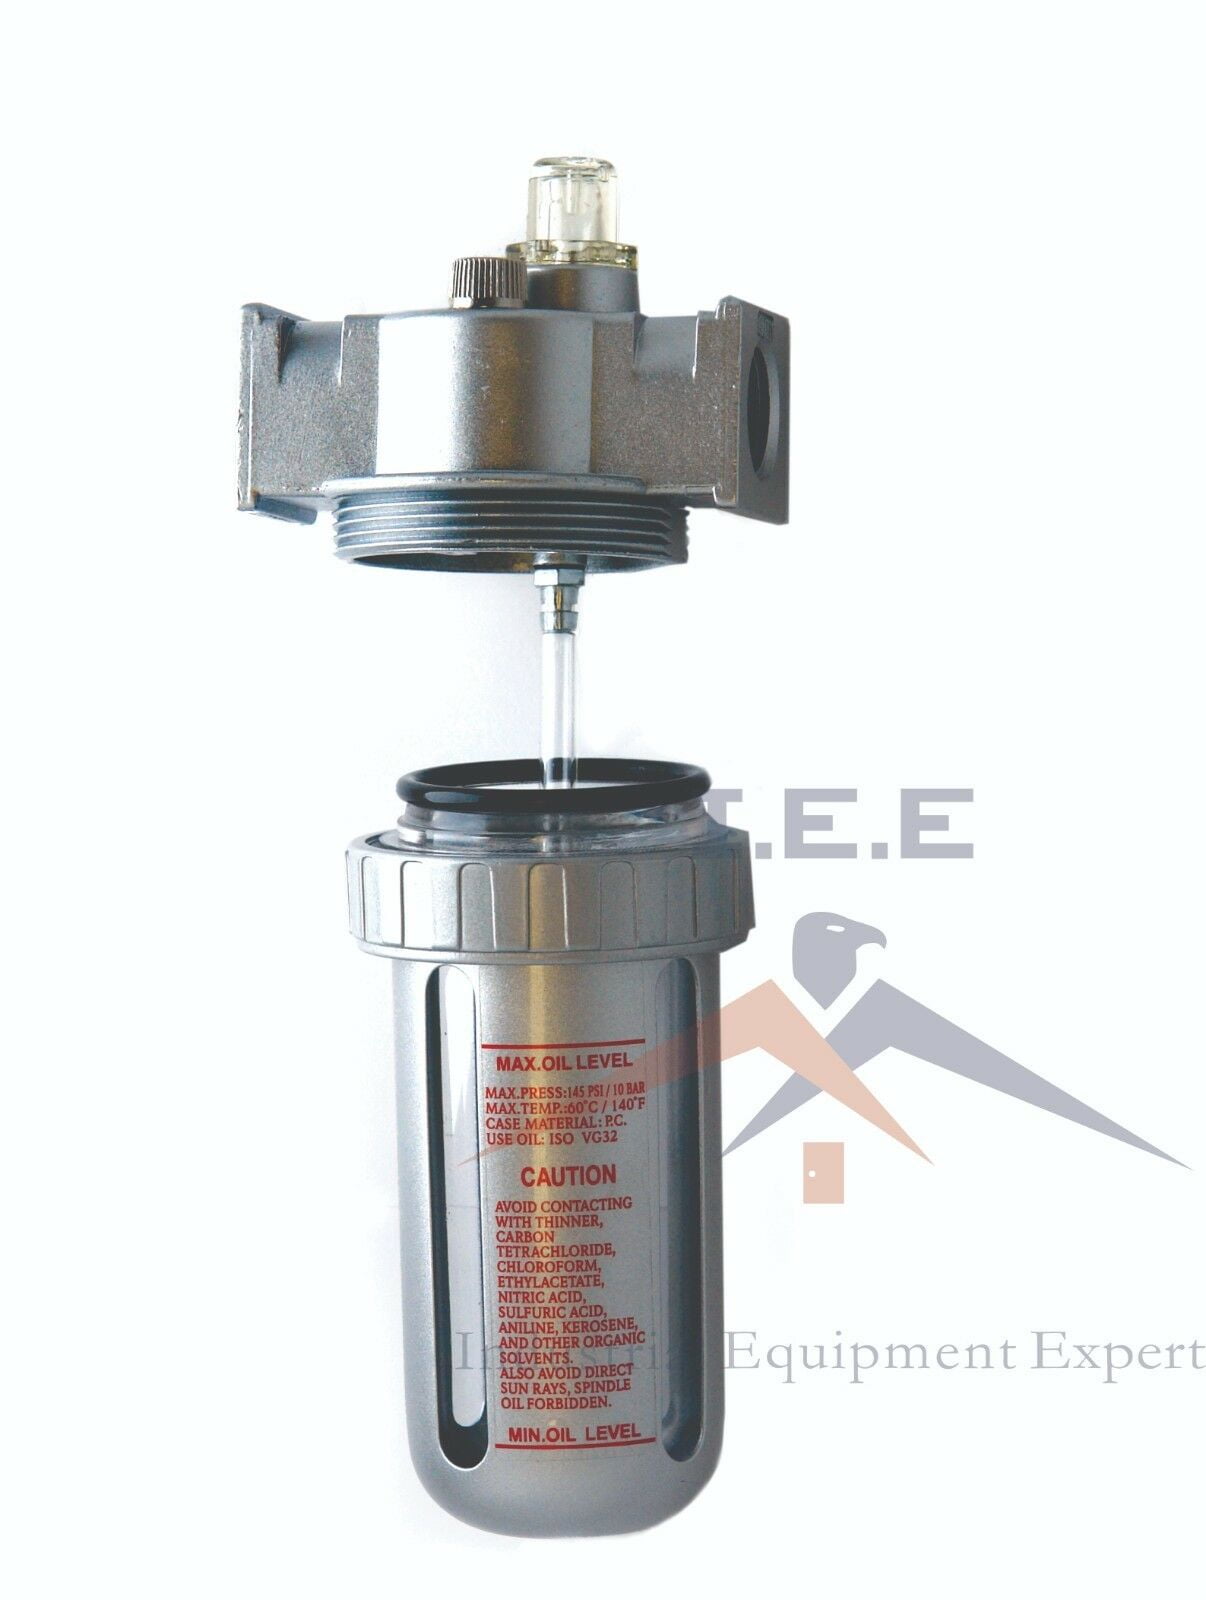 1/2" Lubricator air in line OILER compressed air compressor air tools 